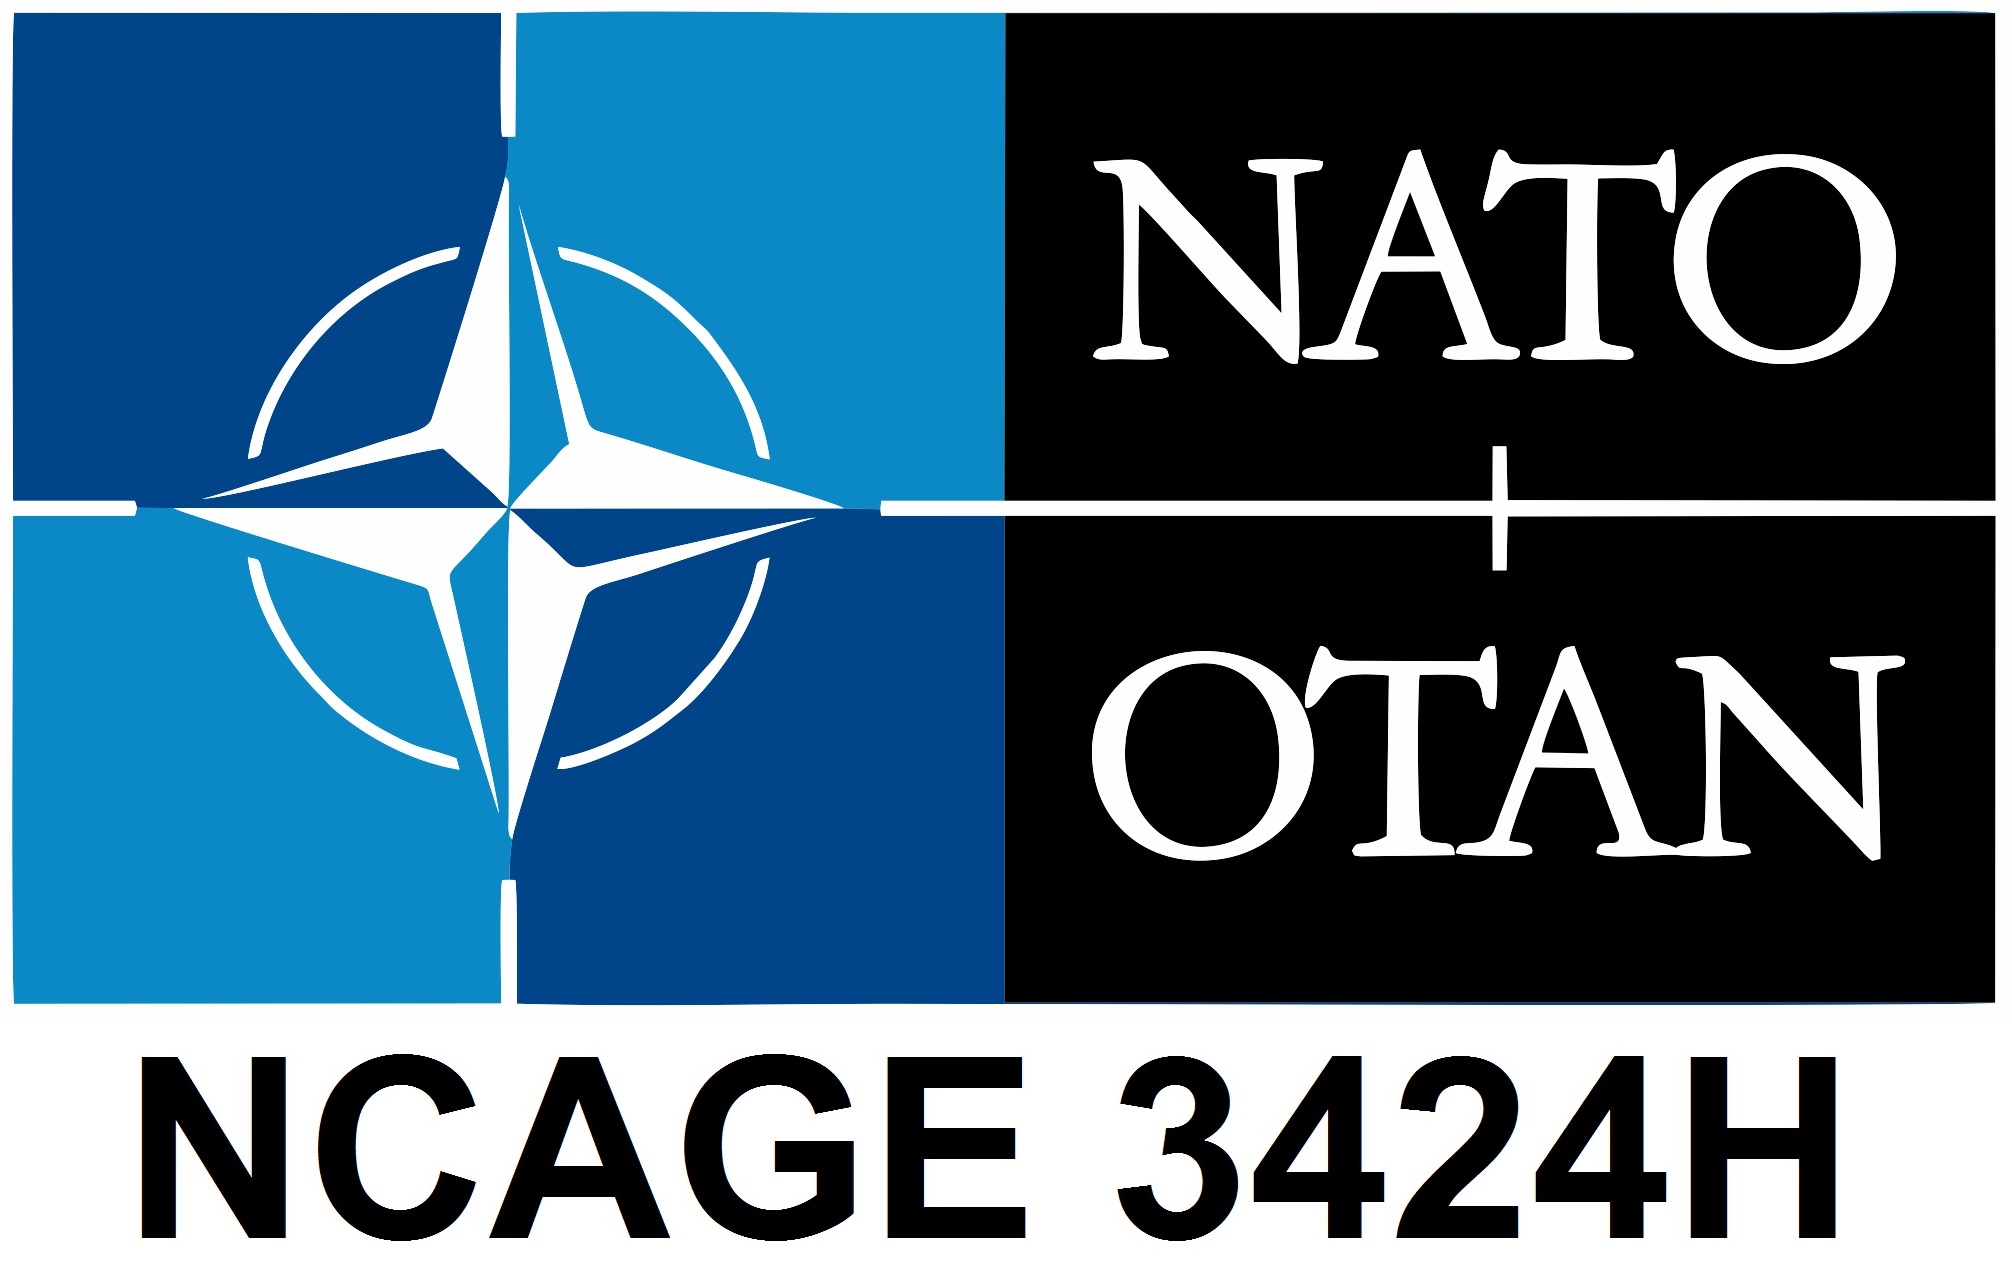 NATO OTAN NCAGE 3424H